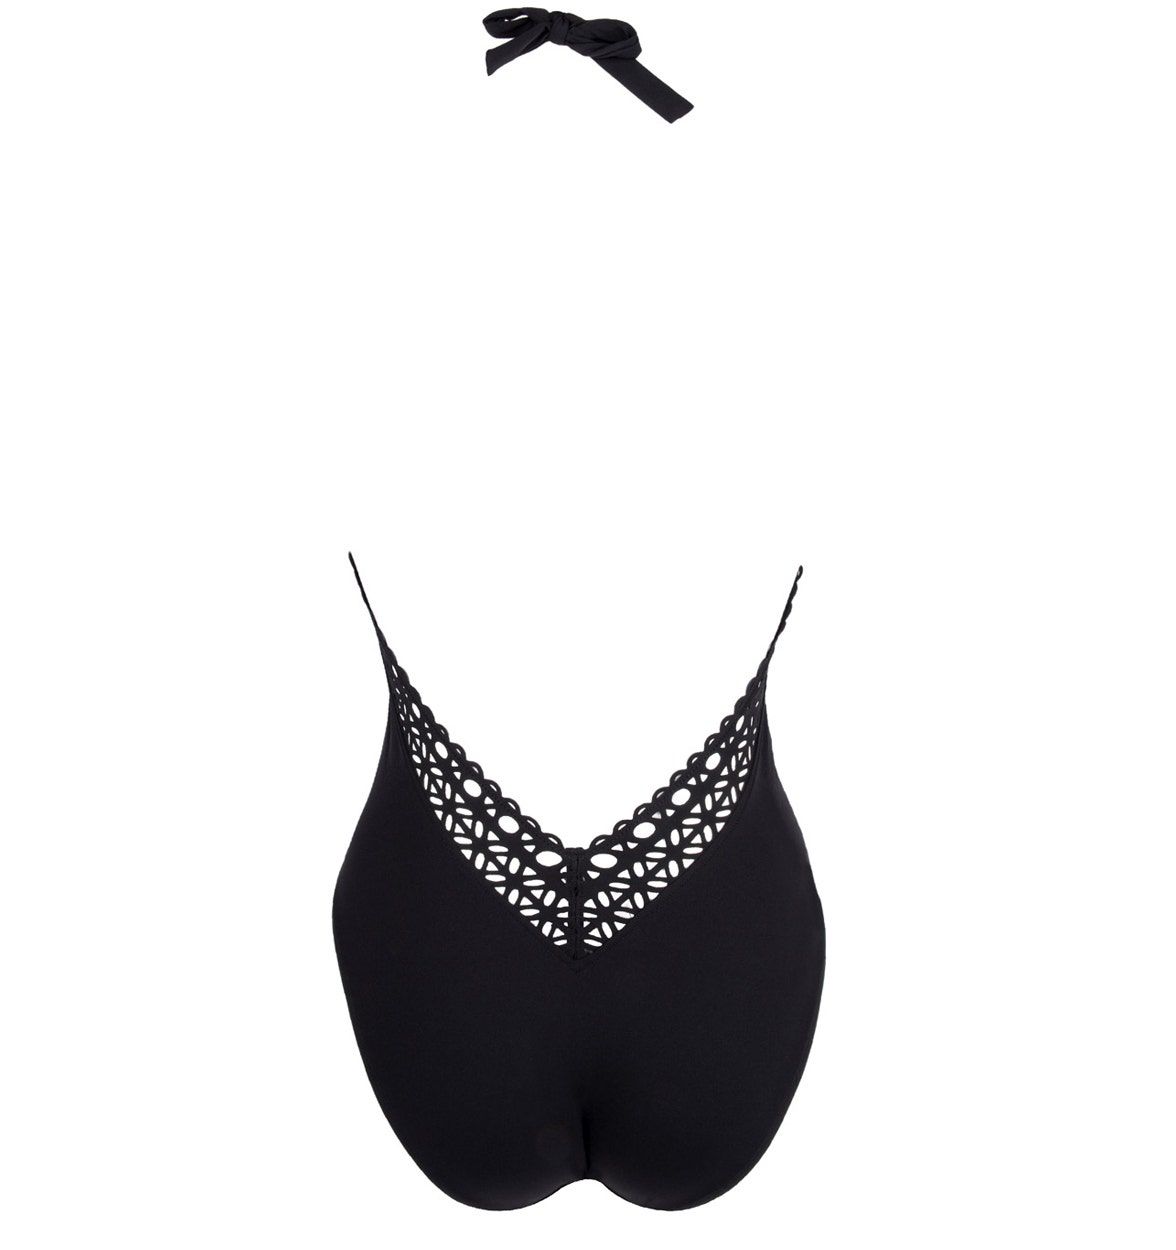 LISE CHARMEL black one-piece swimsuit INTERO SEXY